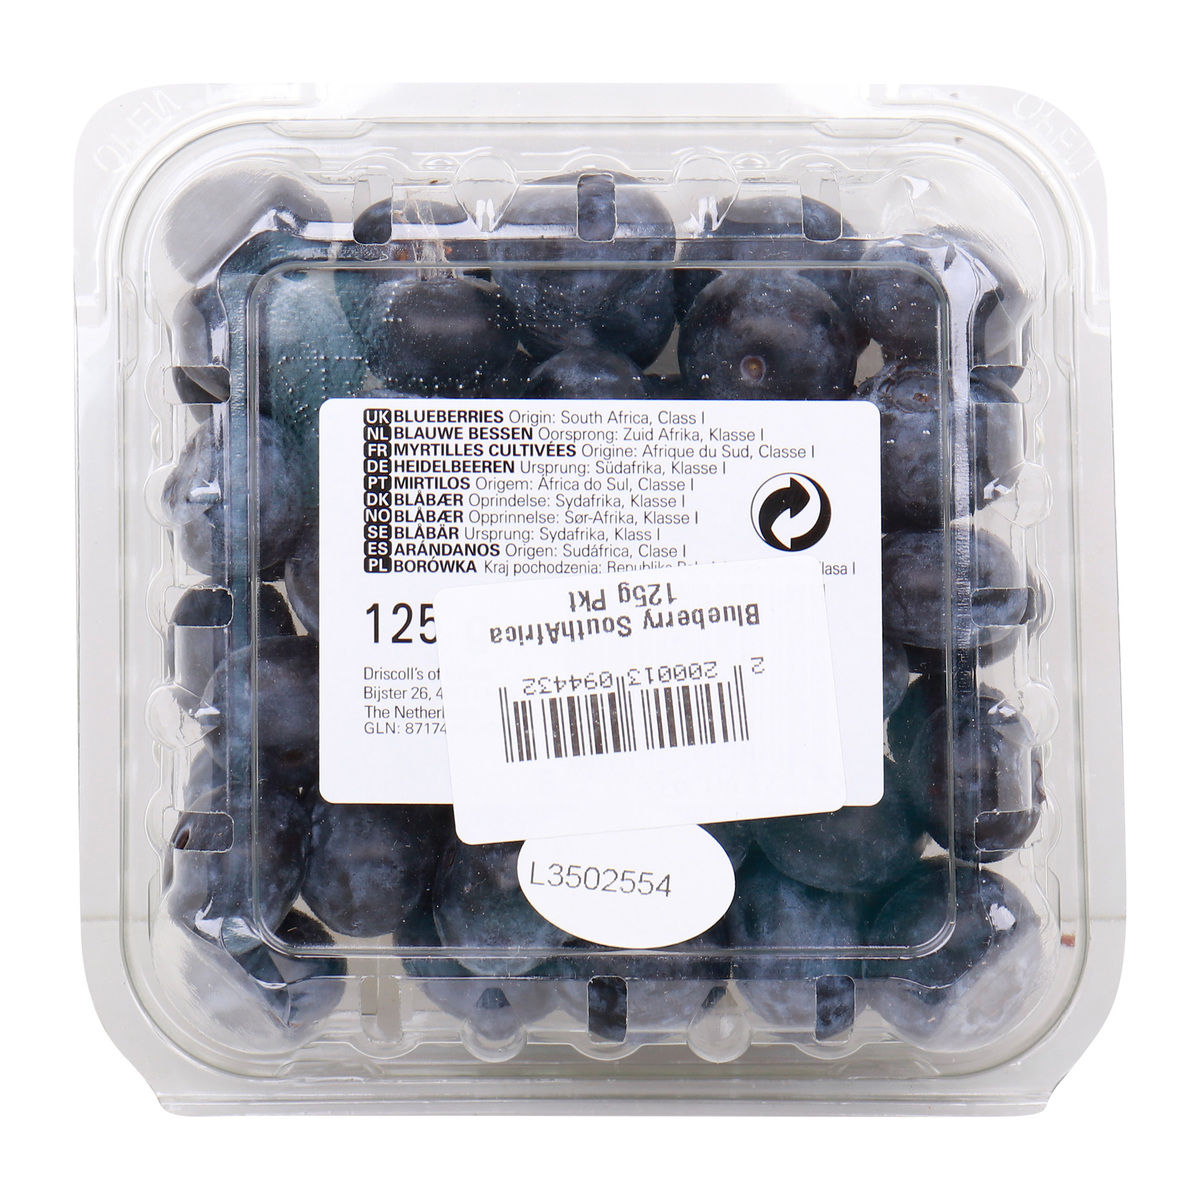 Driscolls Blueberry South Africa, 125 g